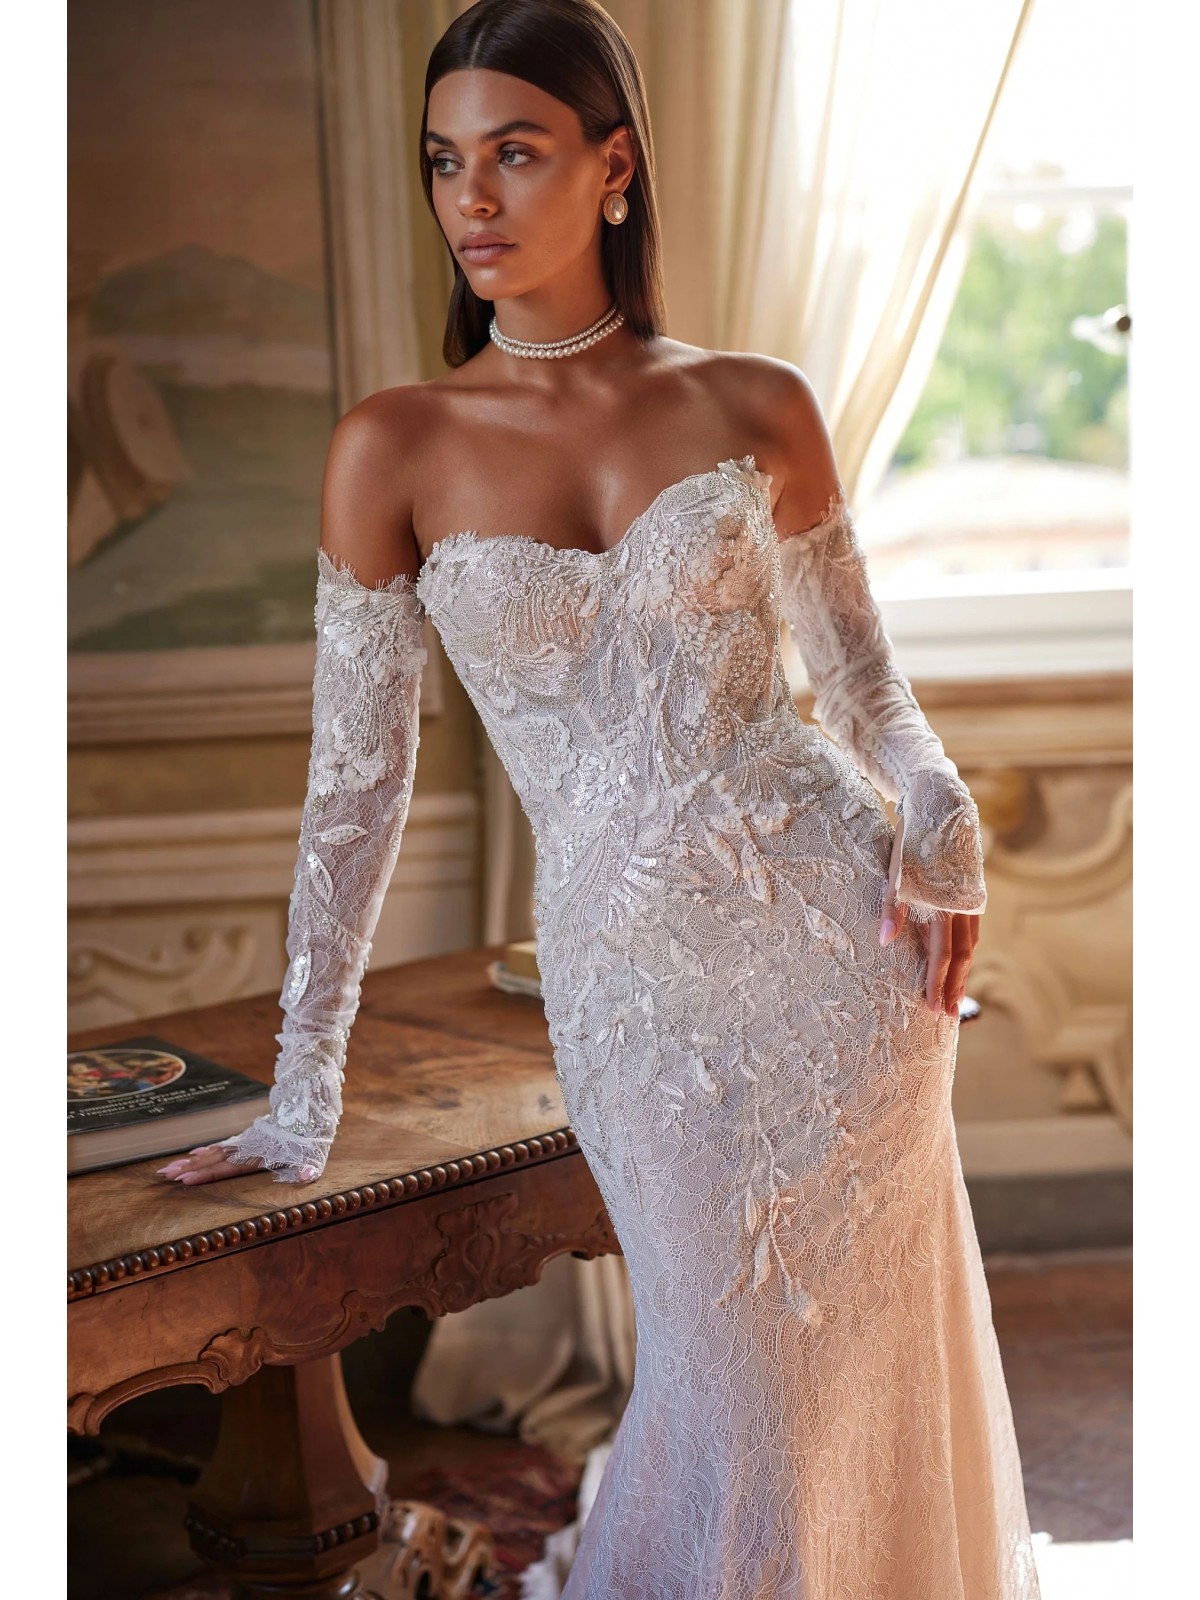 Luxury Wedding Dress - Embroidery, Skirt with Lining, and Detachable Sleeves - Dori - LIDA-01347+SL.42.17